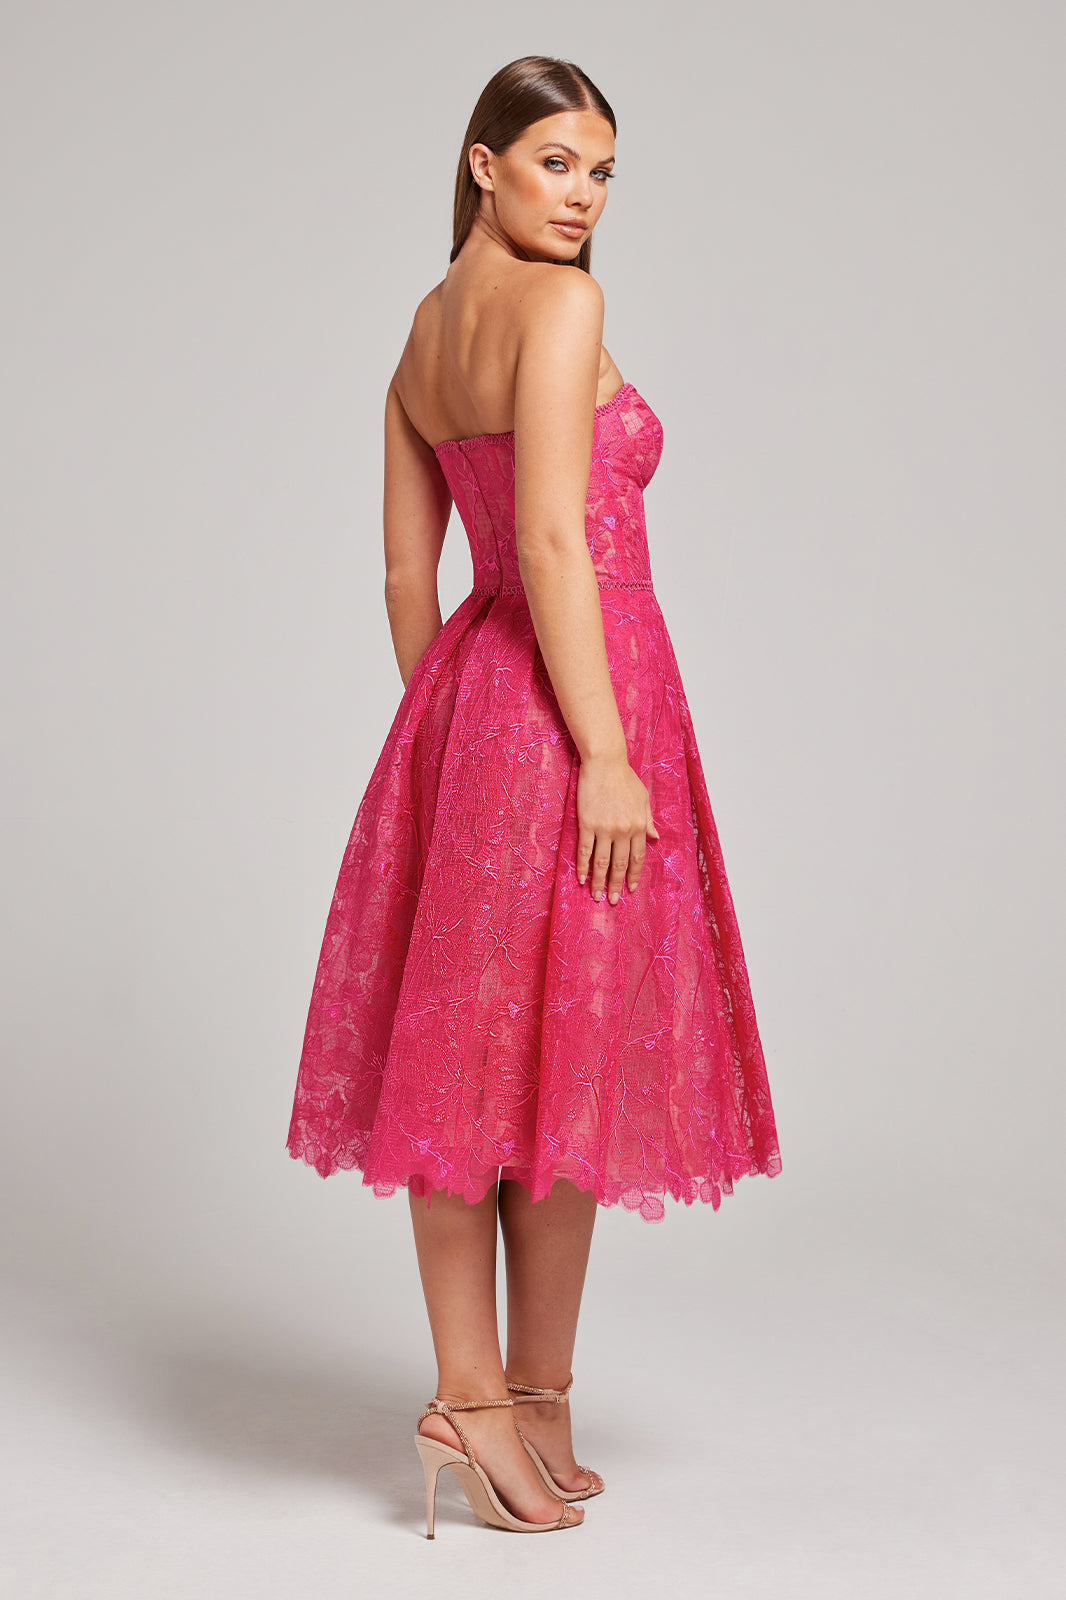 Olivia Hot Pink Dress Dresses Nadine Merabi